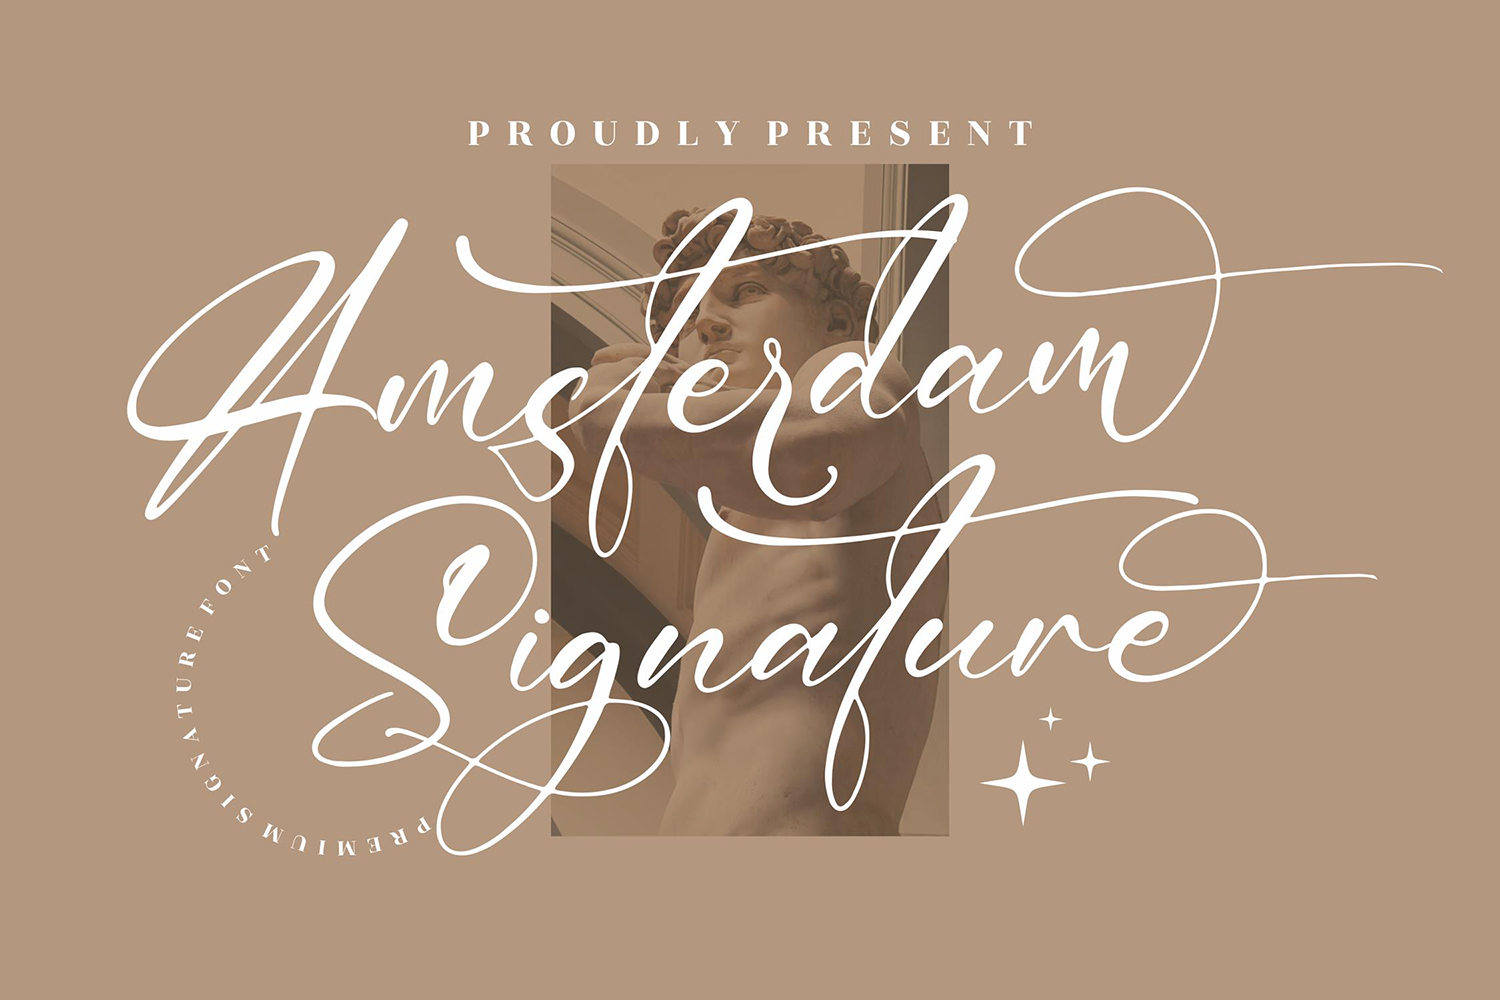 Amsterdam Signature Free Font